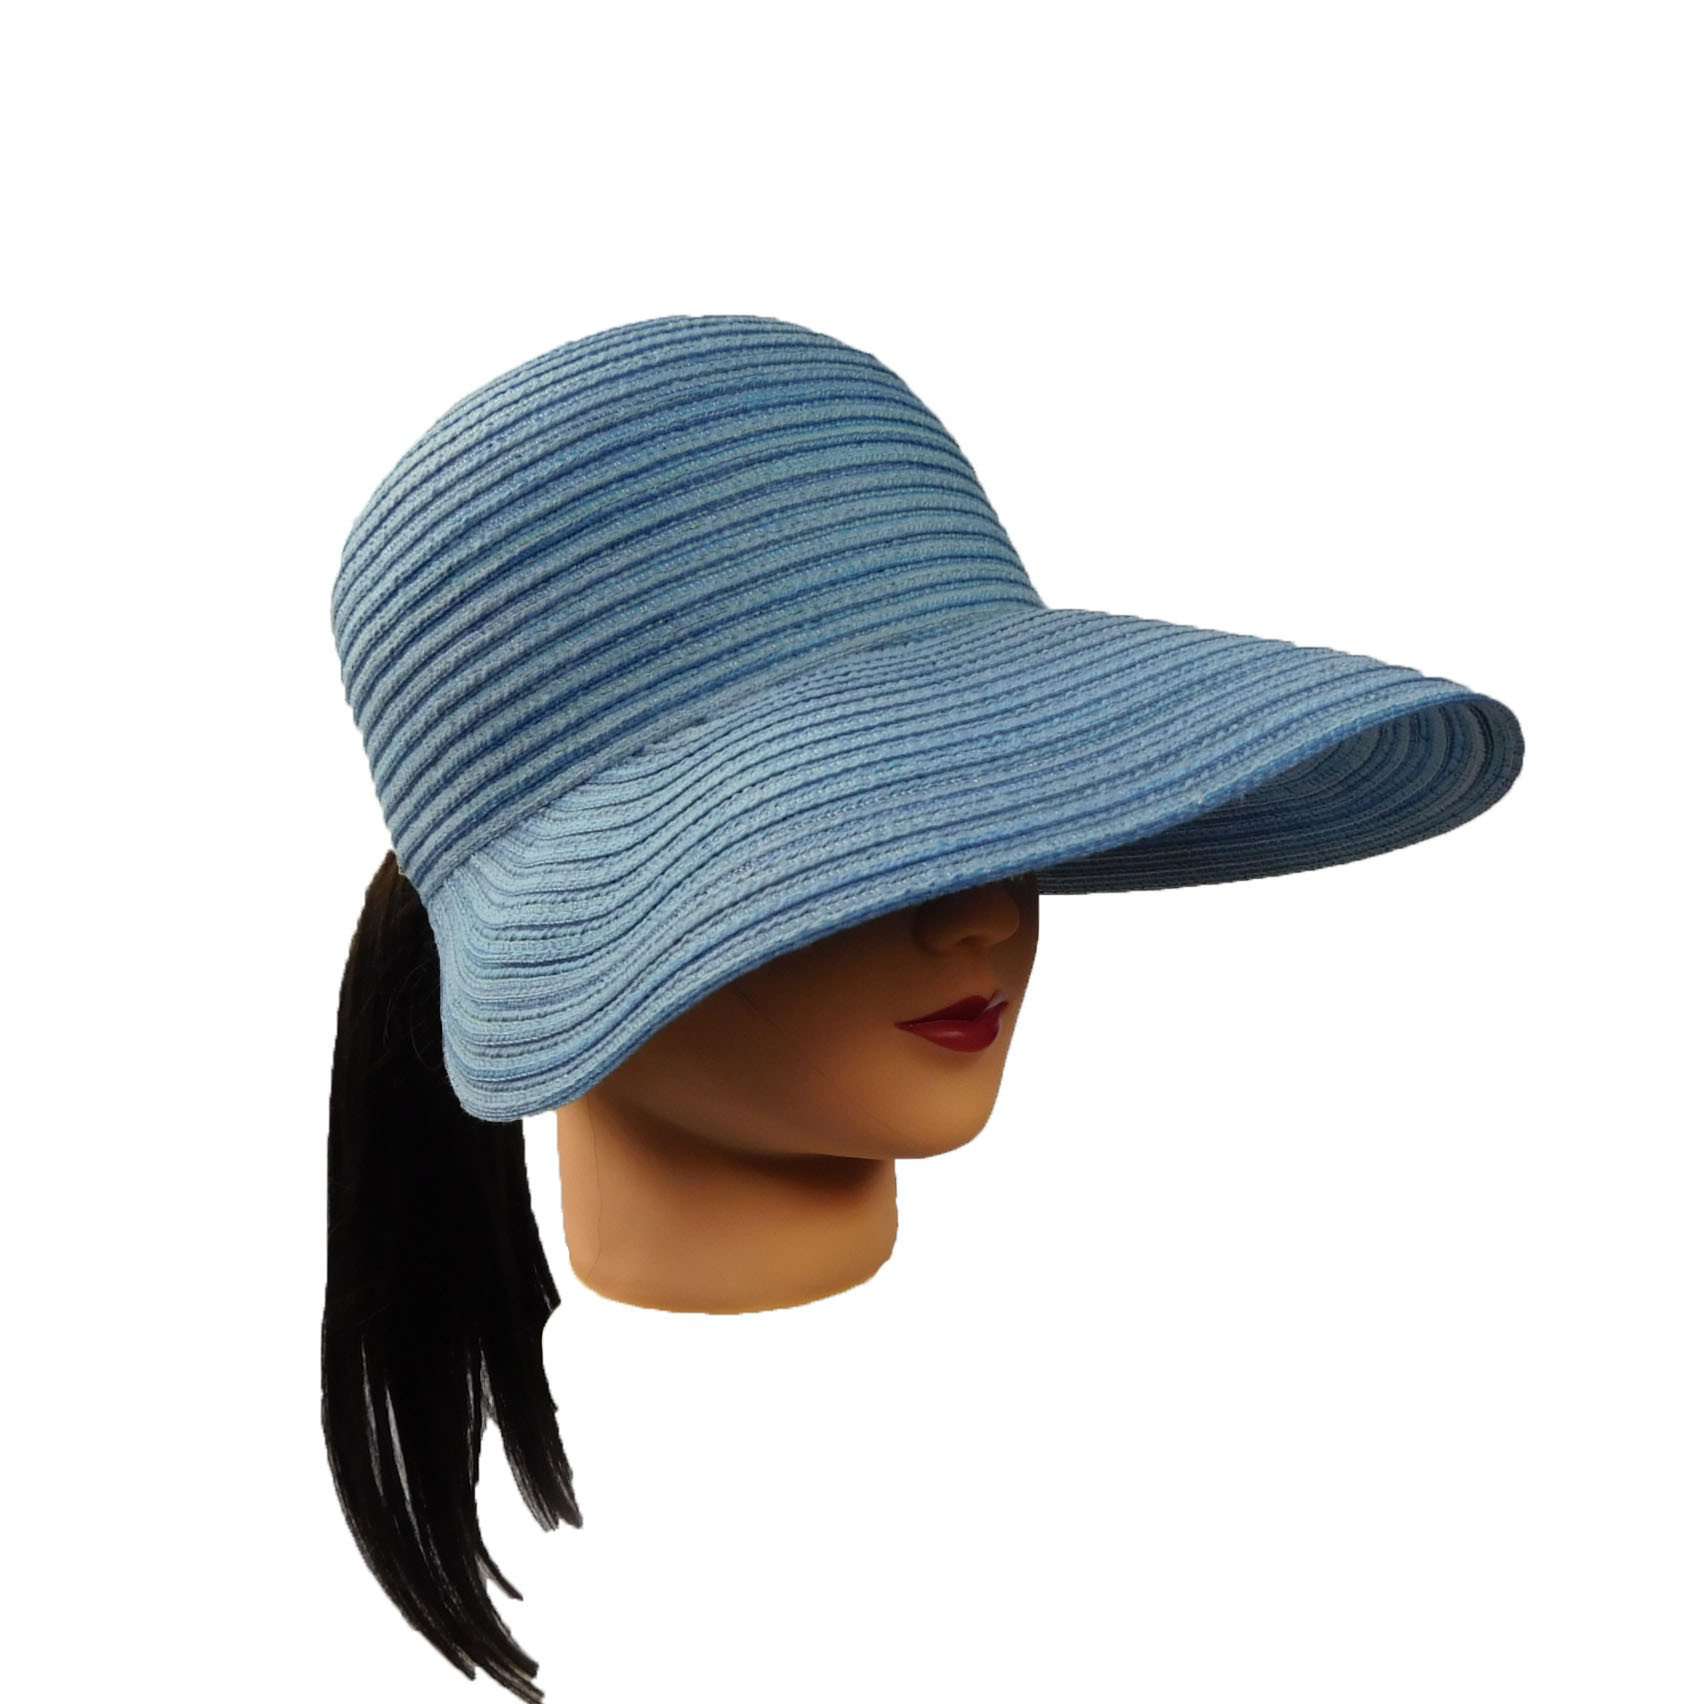 Big Bill Women's Facesaver Cap Cap Boardwalk Style Hats    